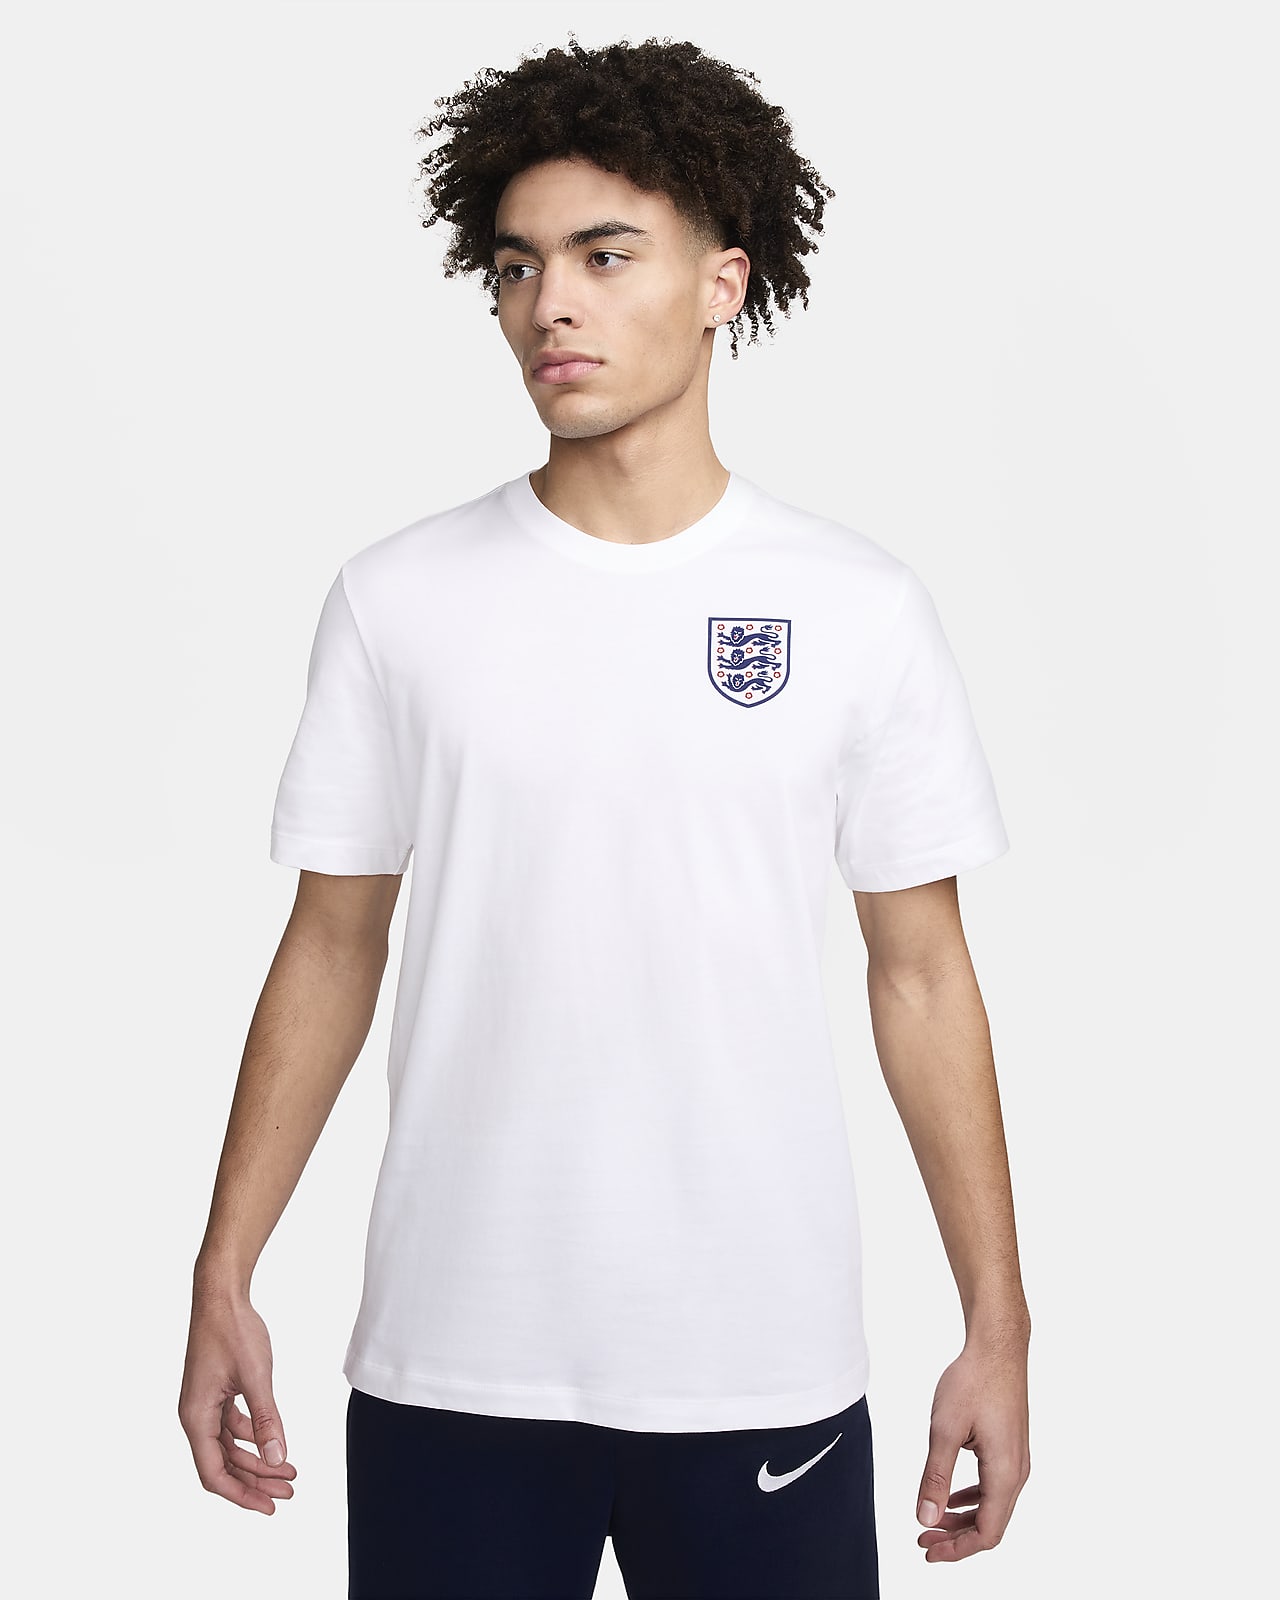 Engeland Nike voetbalshirt voor heren